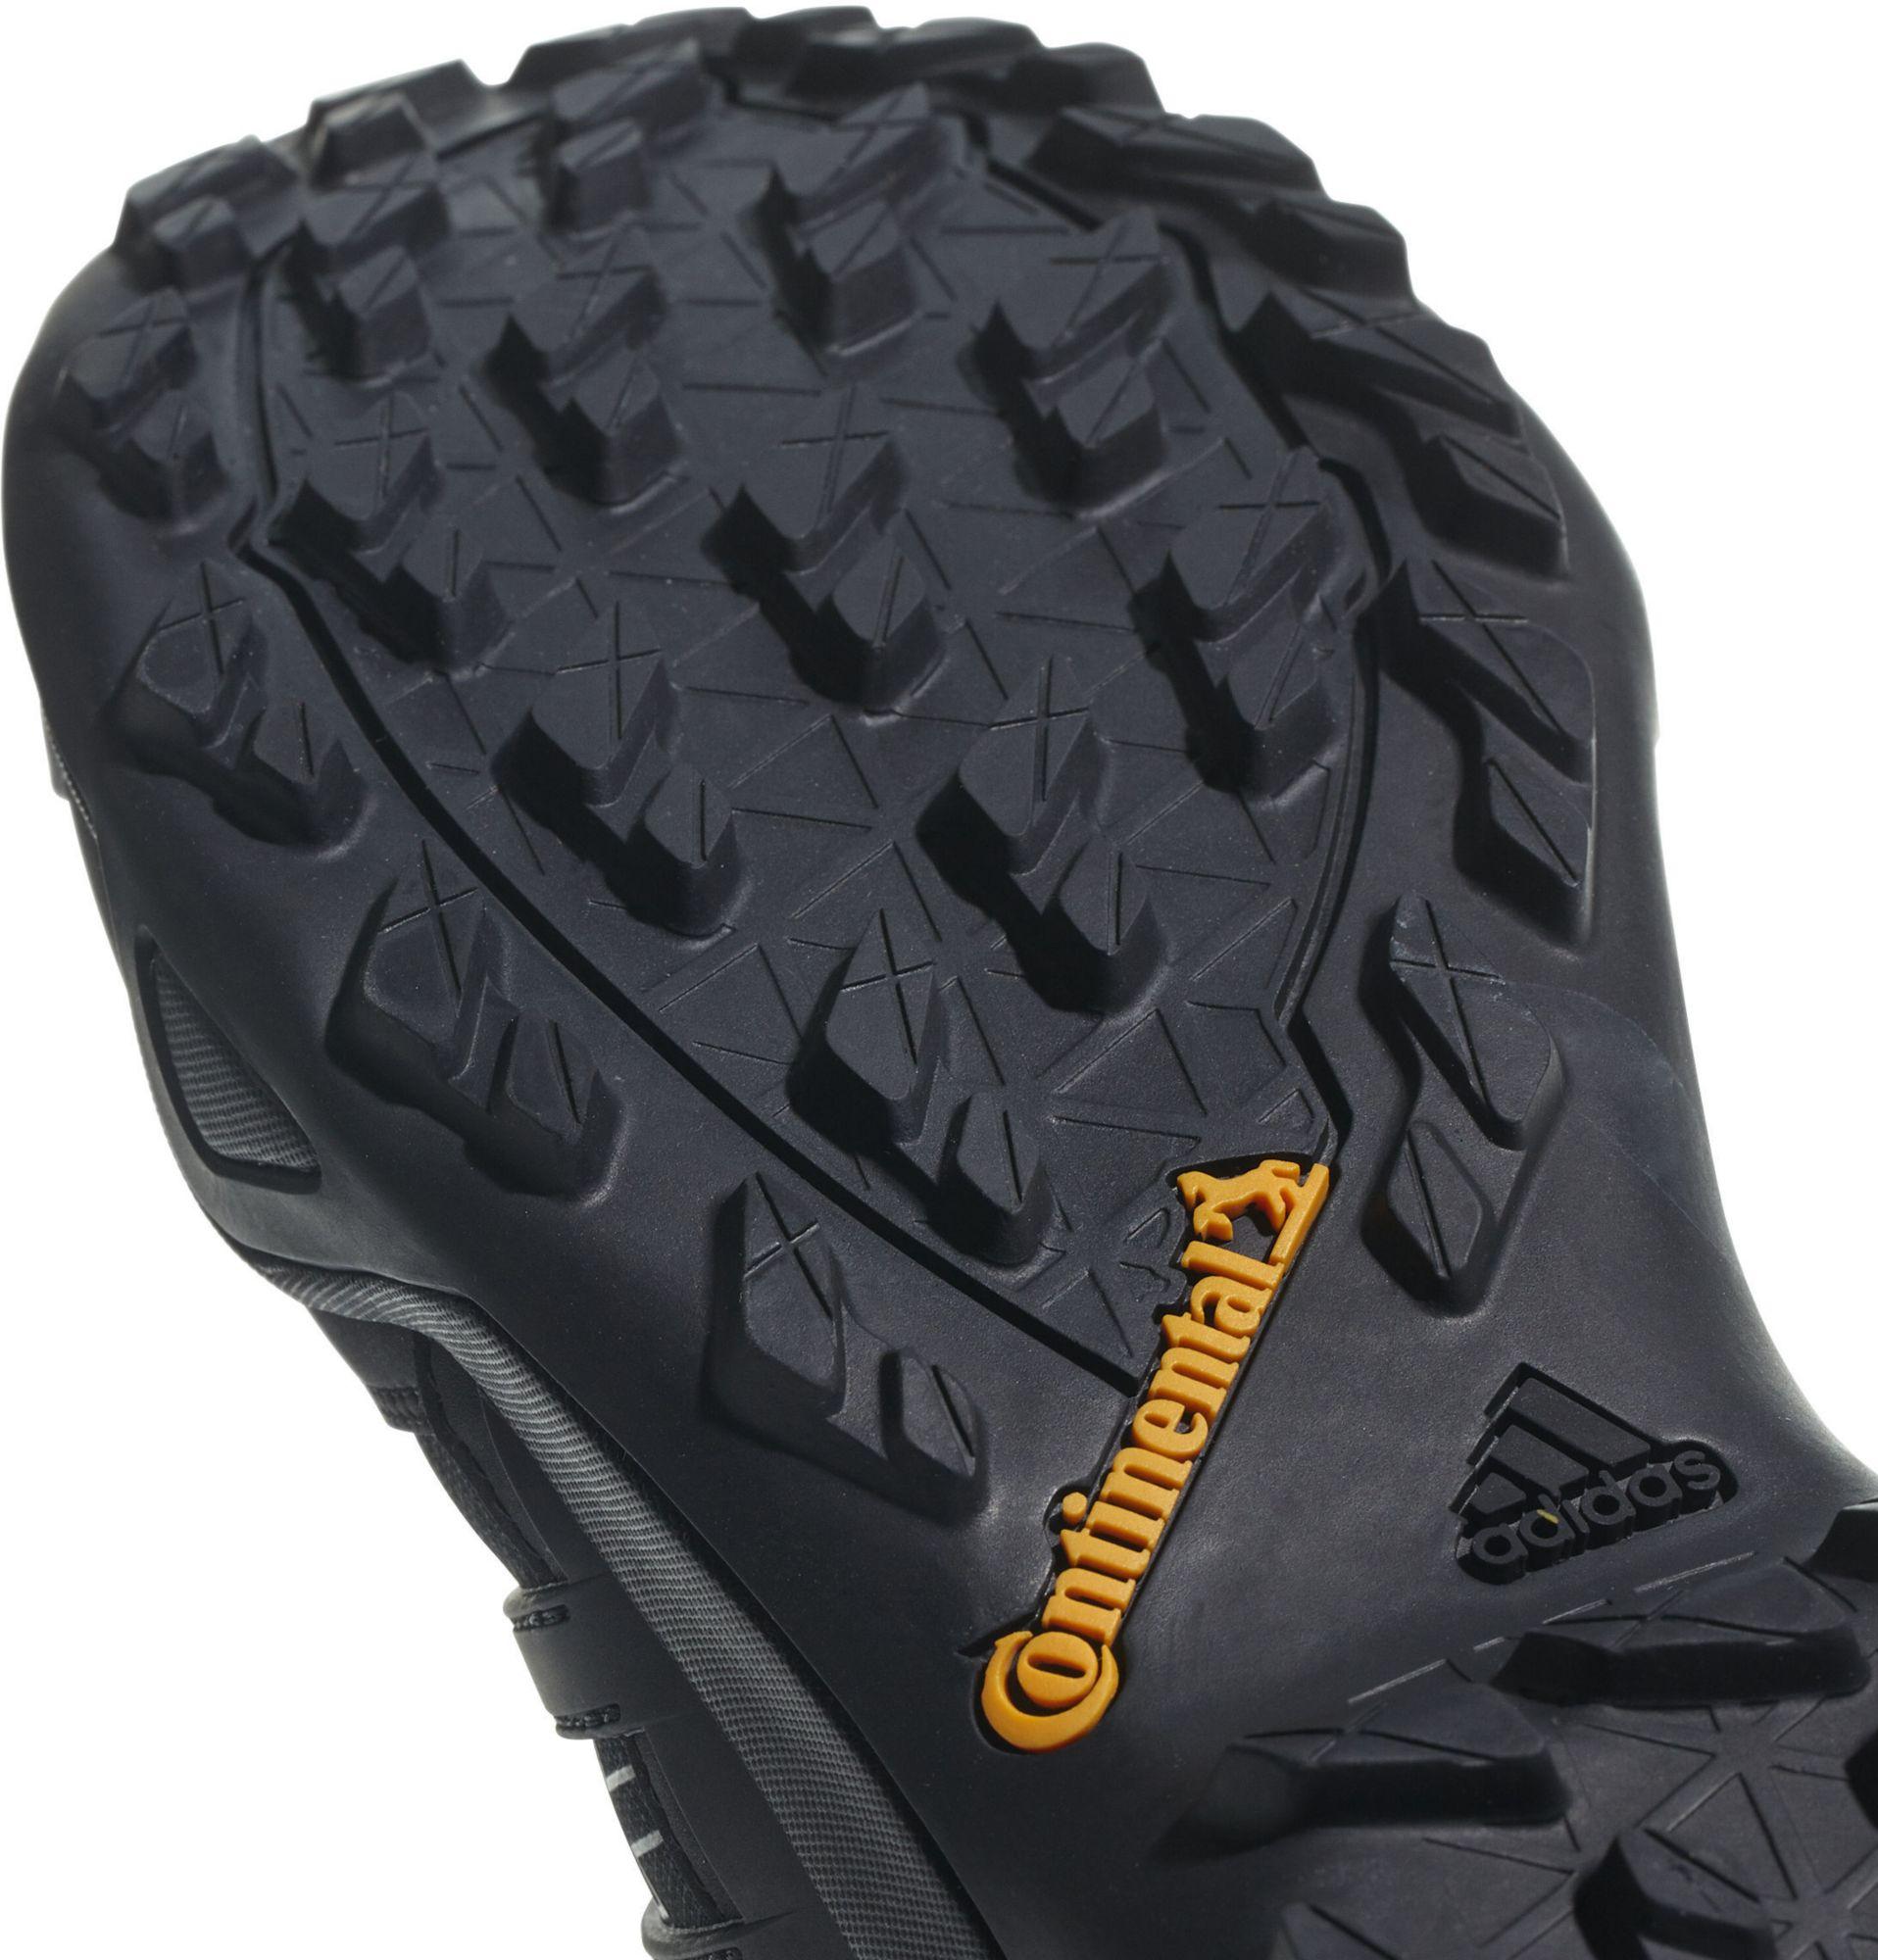 adidas Rubber Terrex Swift R2 Gore-tex Hiking Shoes in Black/Black/Black  (Black) - Save 8% | Lyst